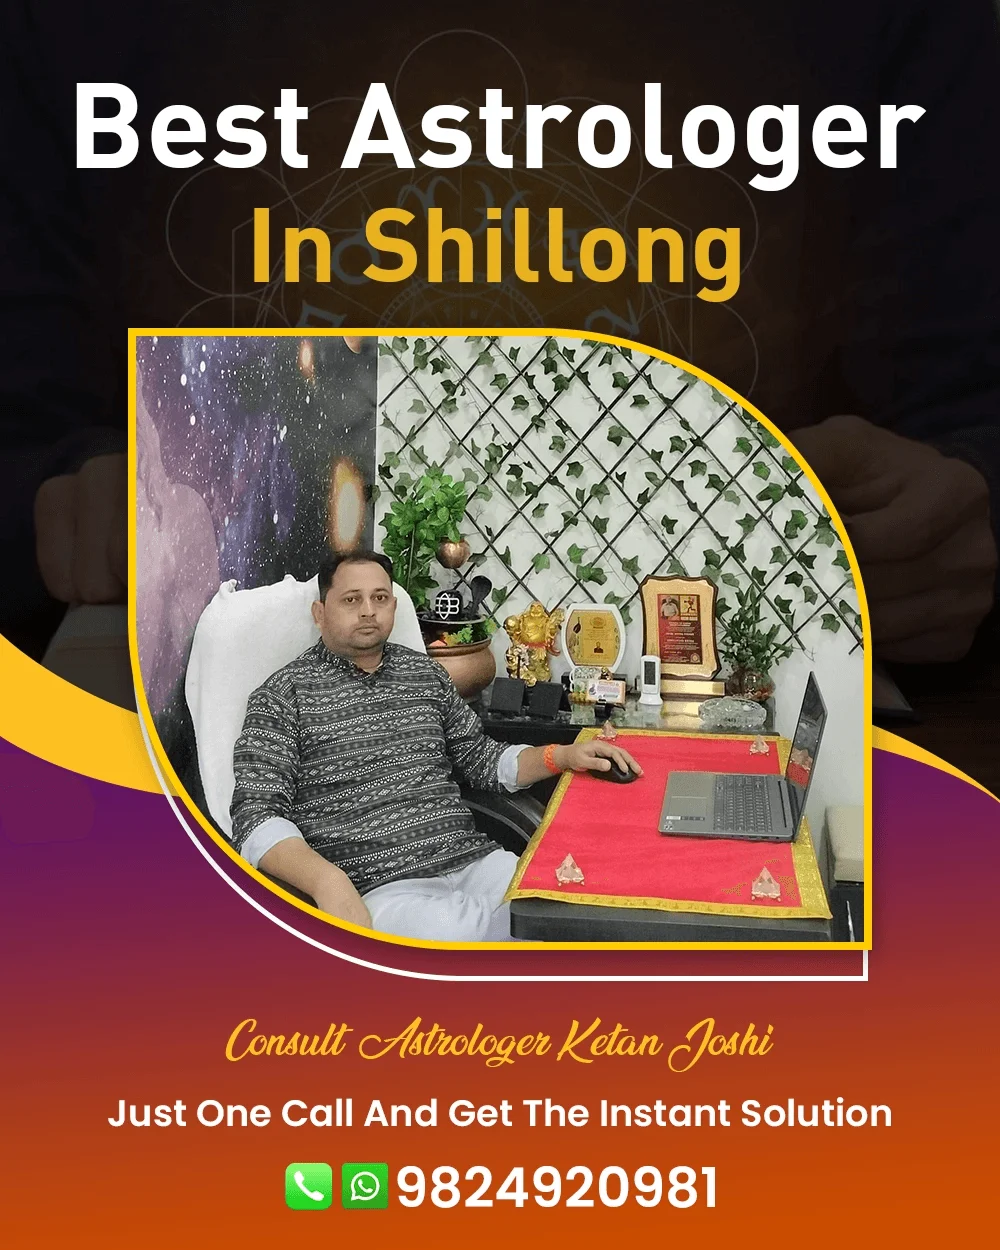 Best Astrologer In Shillong